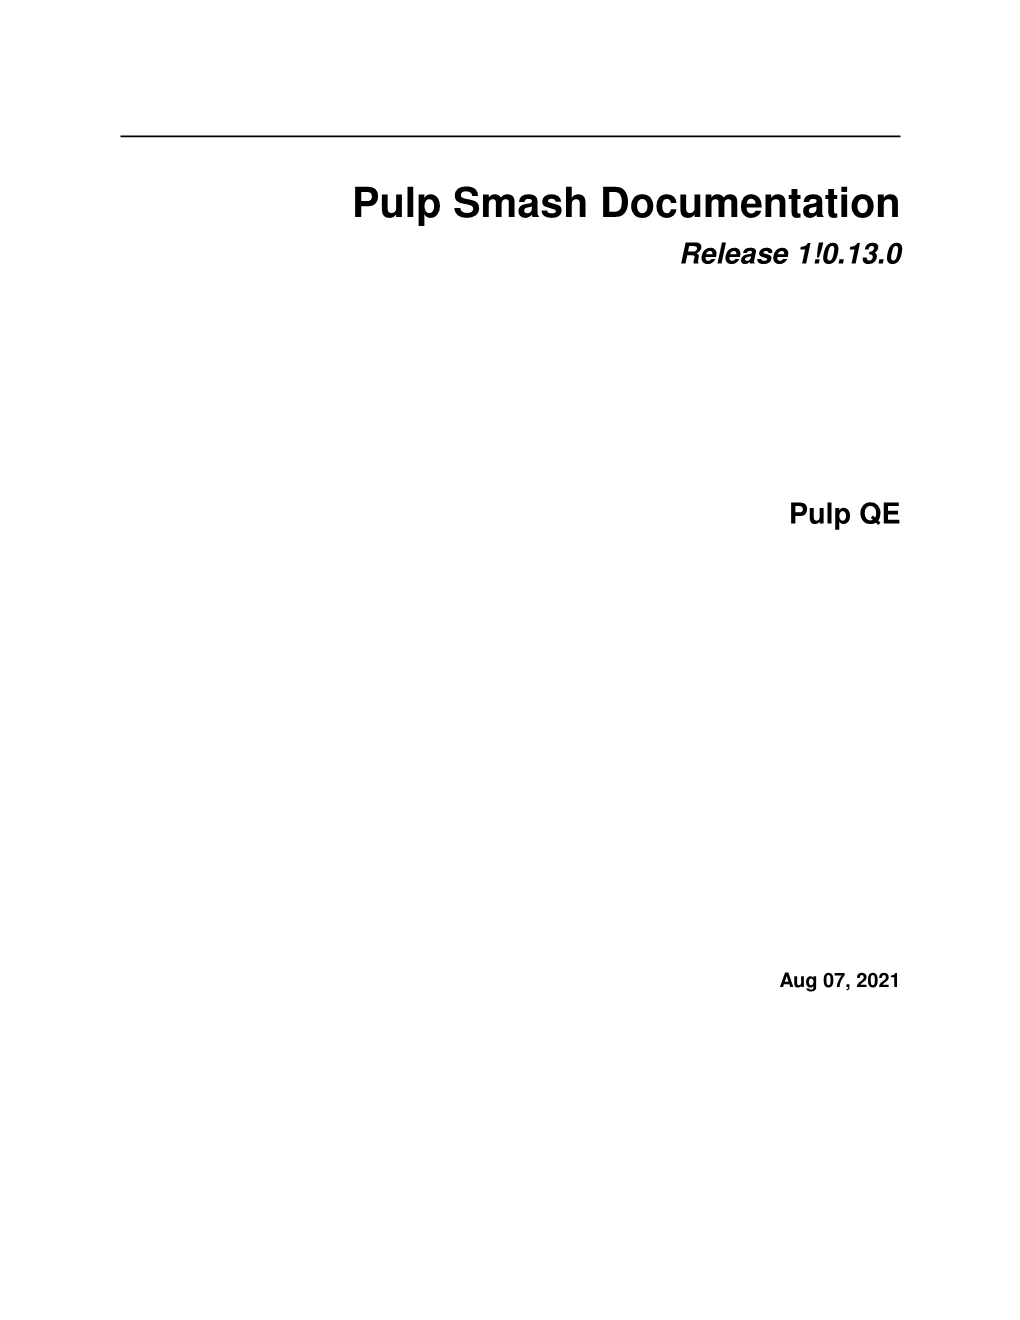 Pulp Smash Documentation Release 1!0.13.0